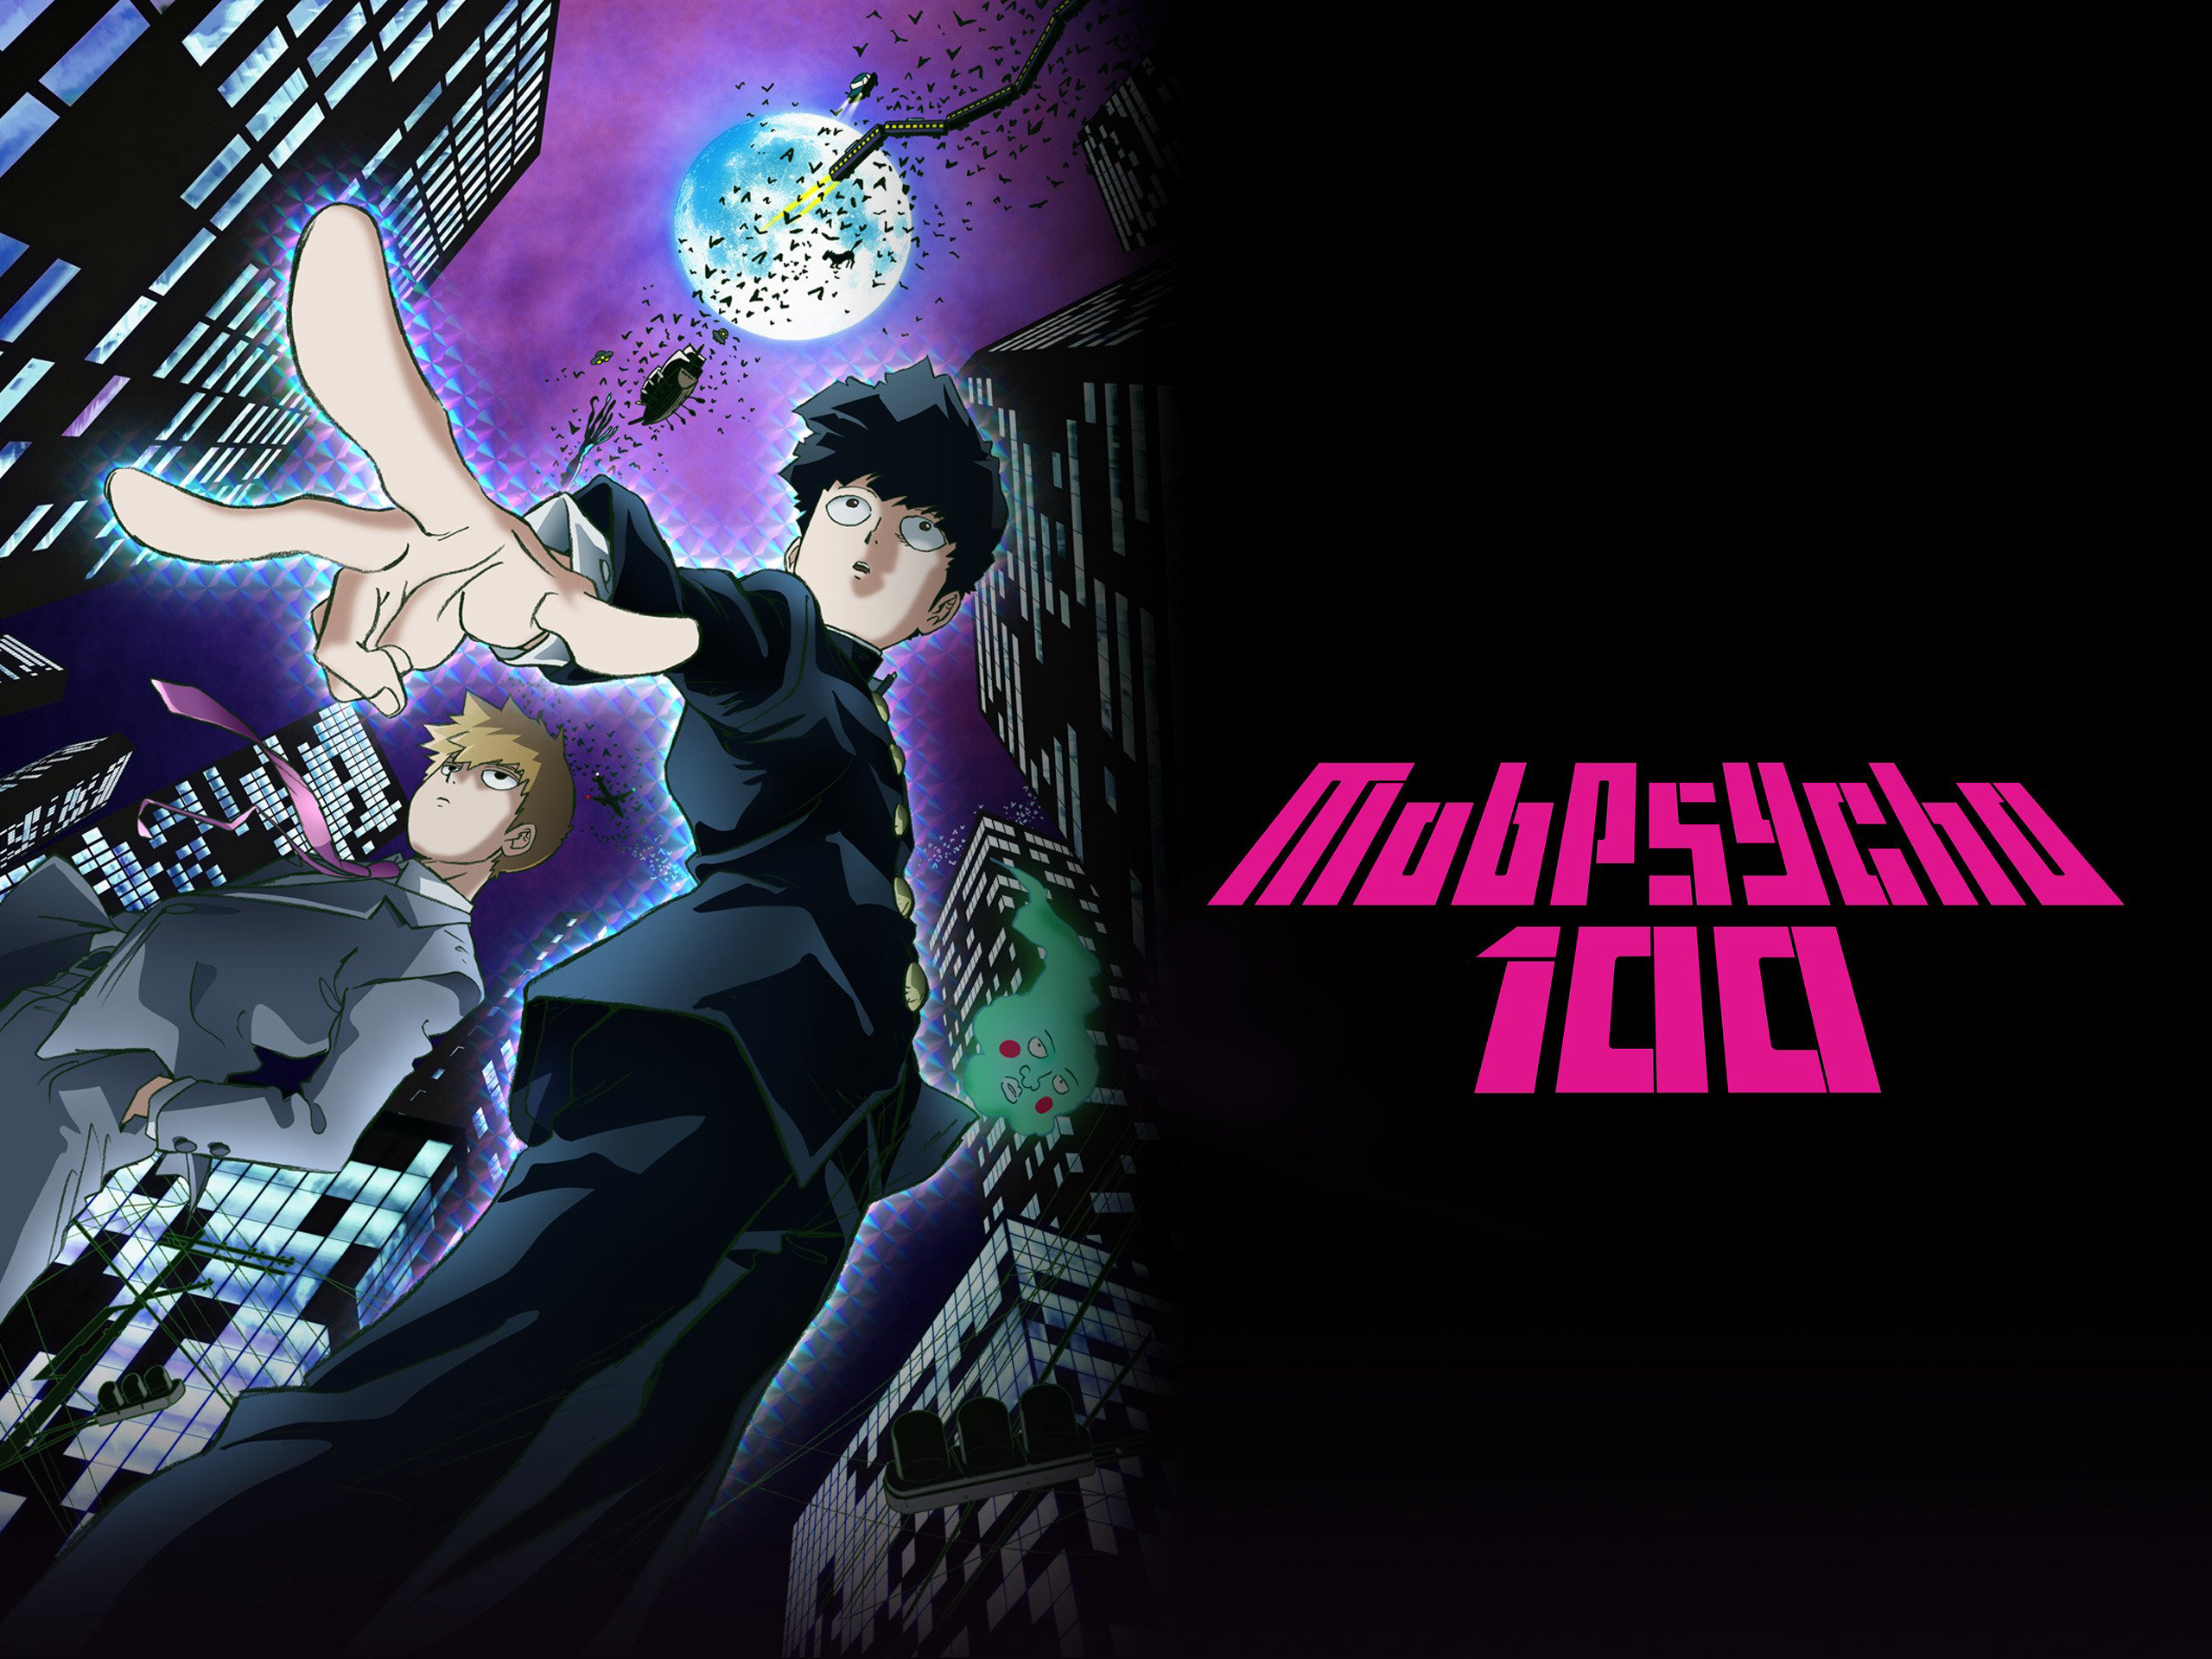 Mob Psycho 100 (Season 1) / Mob Psycho 100 (Season 1) (2016)